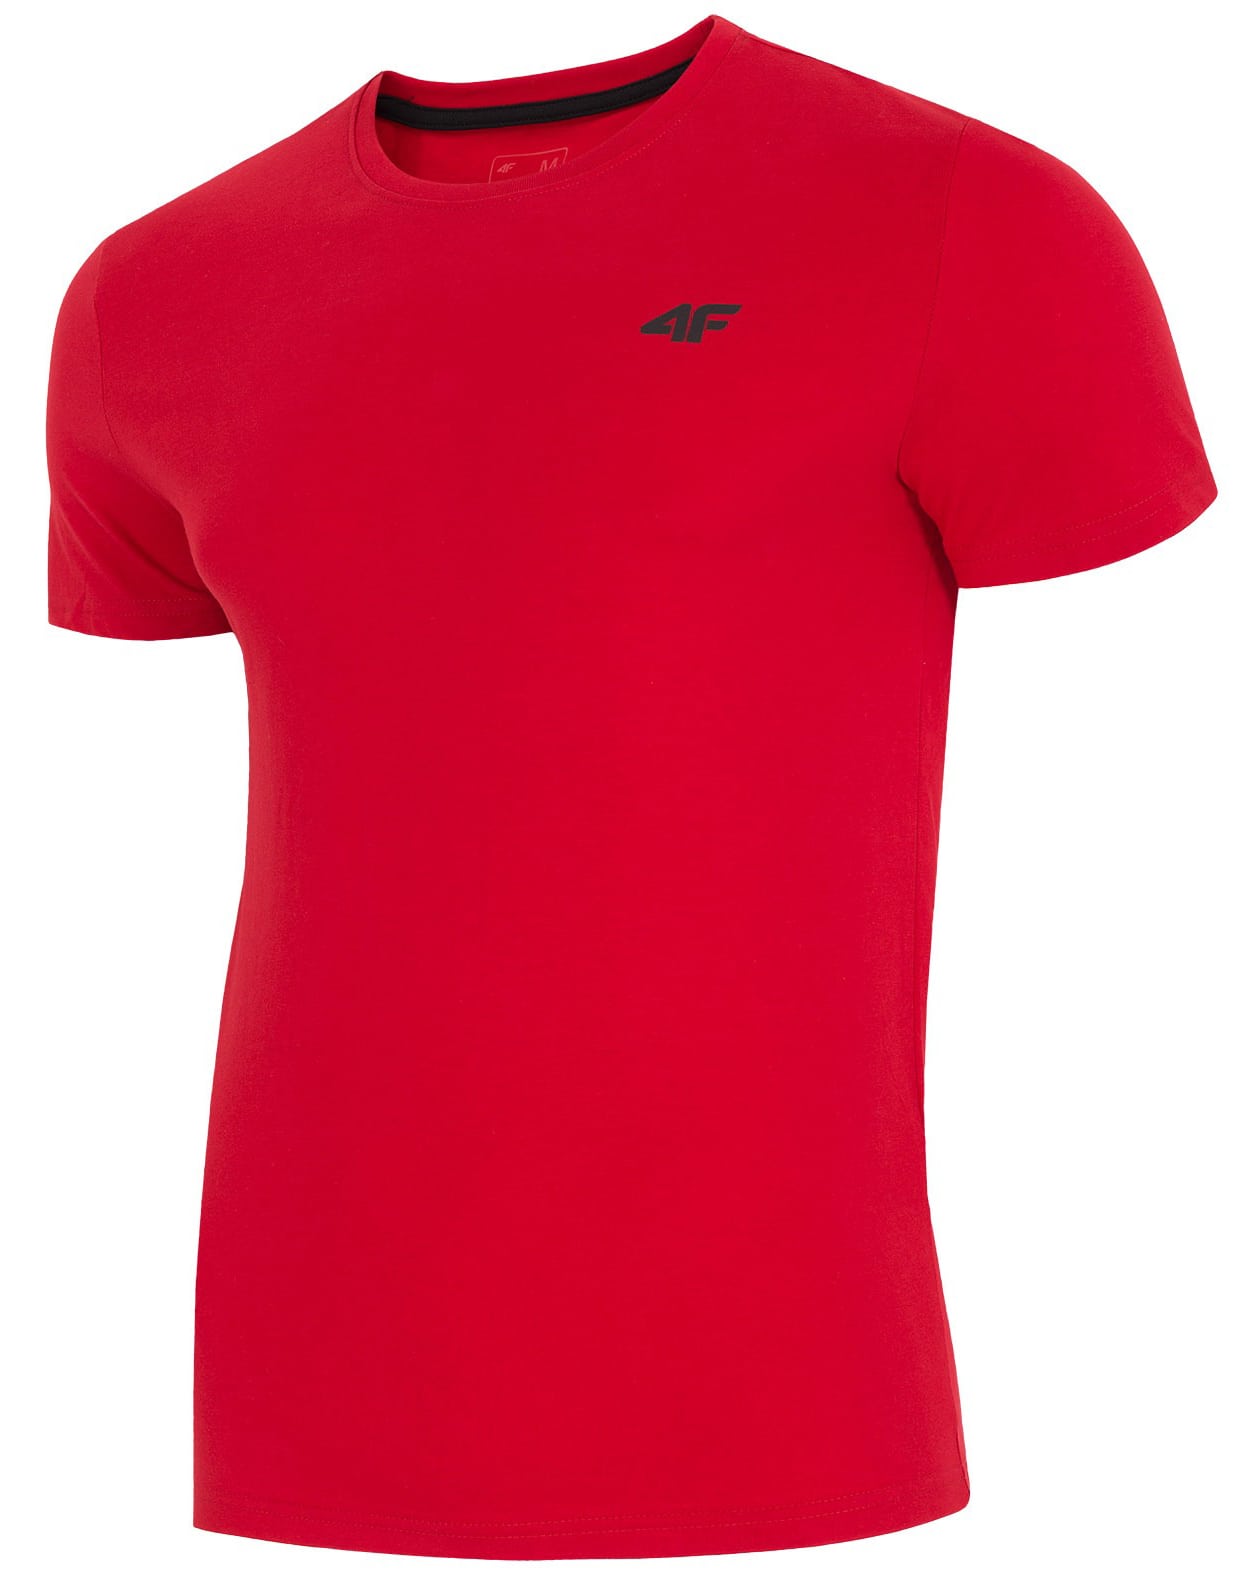 4F Man's T-Shirt - Red